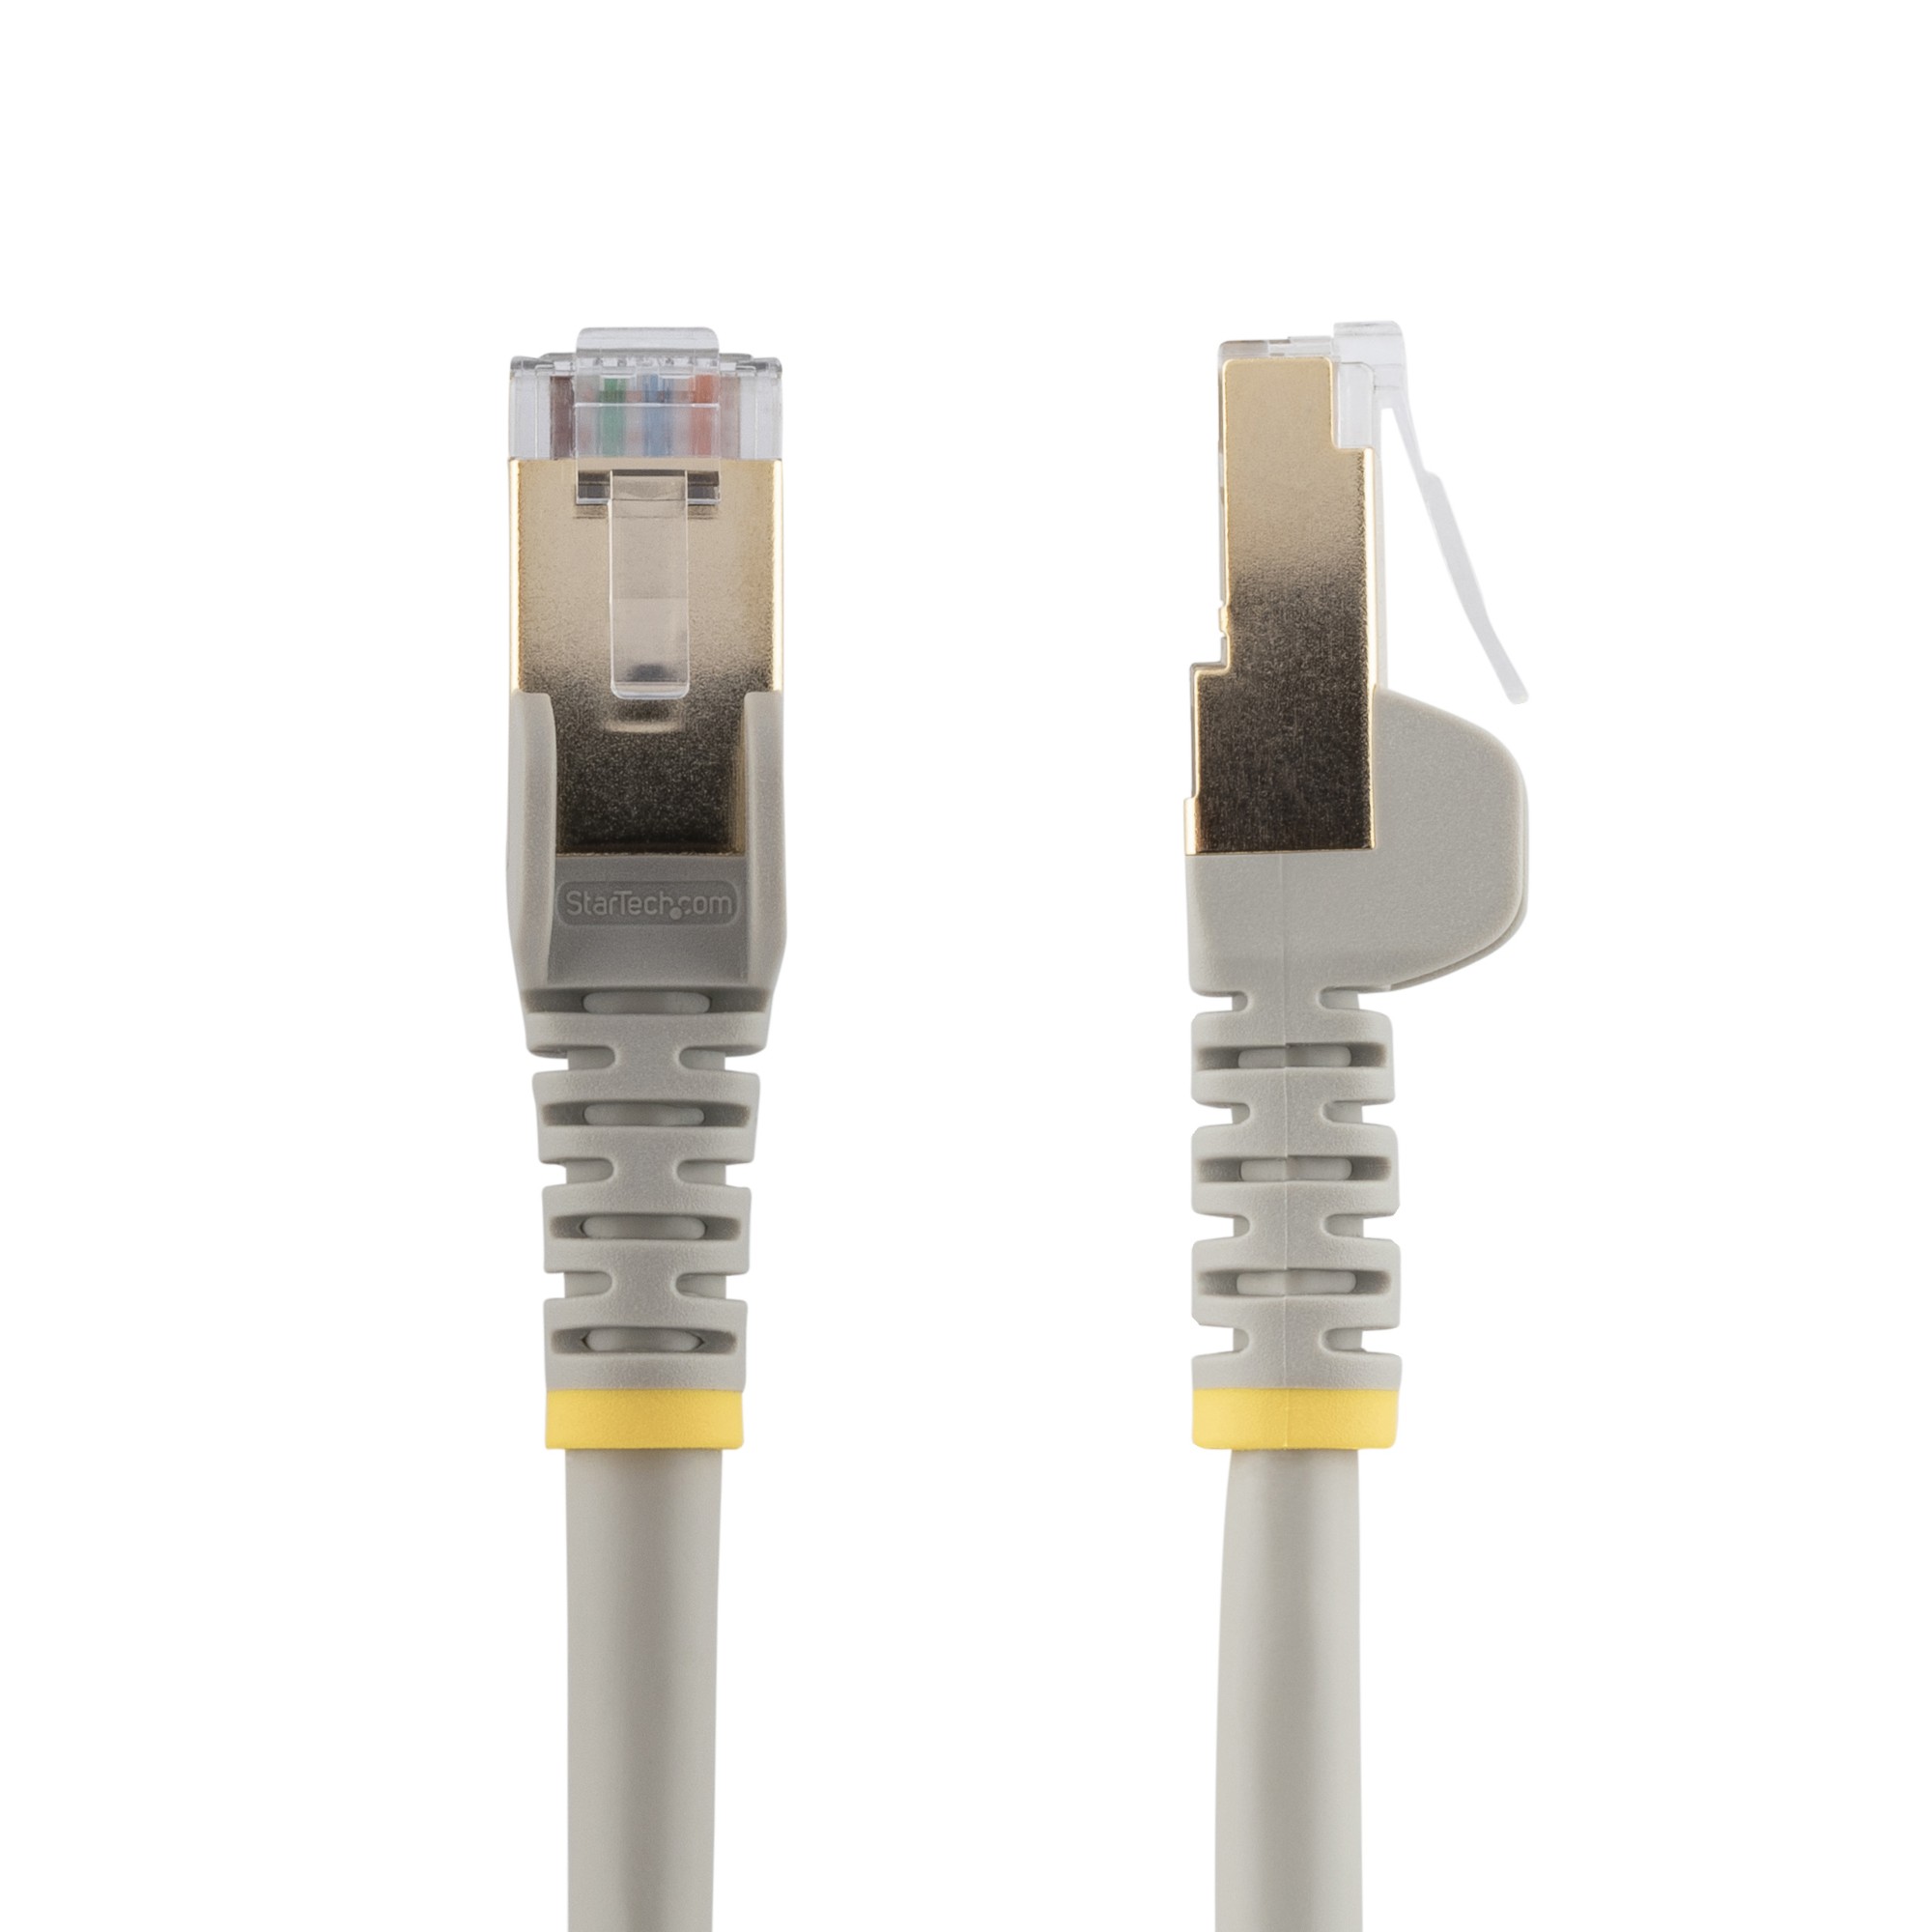 Photos - Cable (video, audio, USB) Startech.com 7m CAT6a Ethernet Cable - 10 Gigabit Shielded Snagless RJ 6AS 